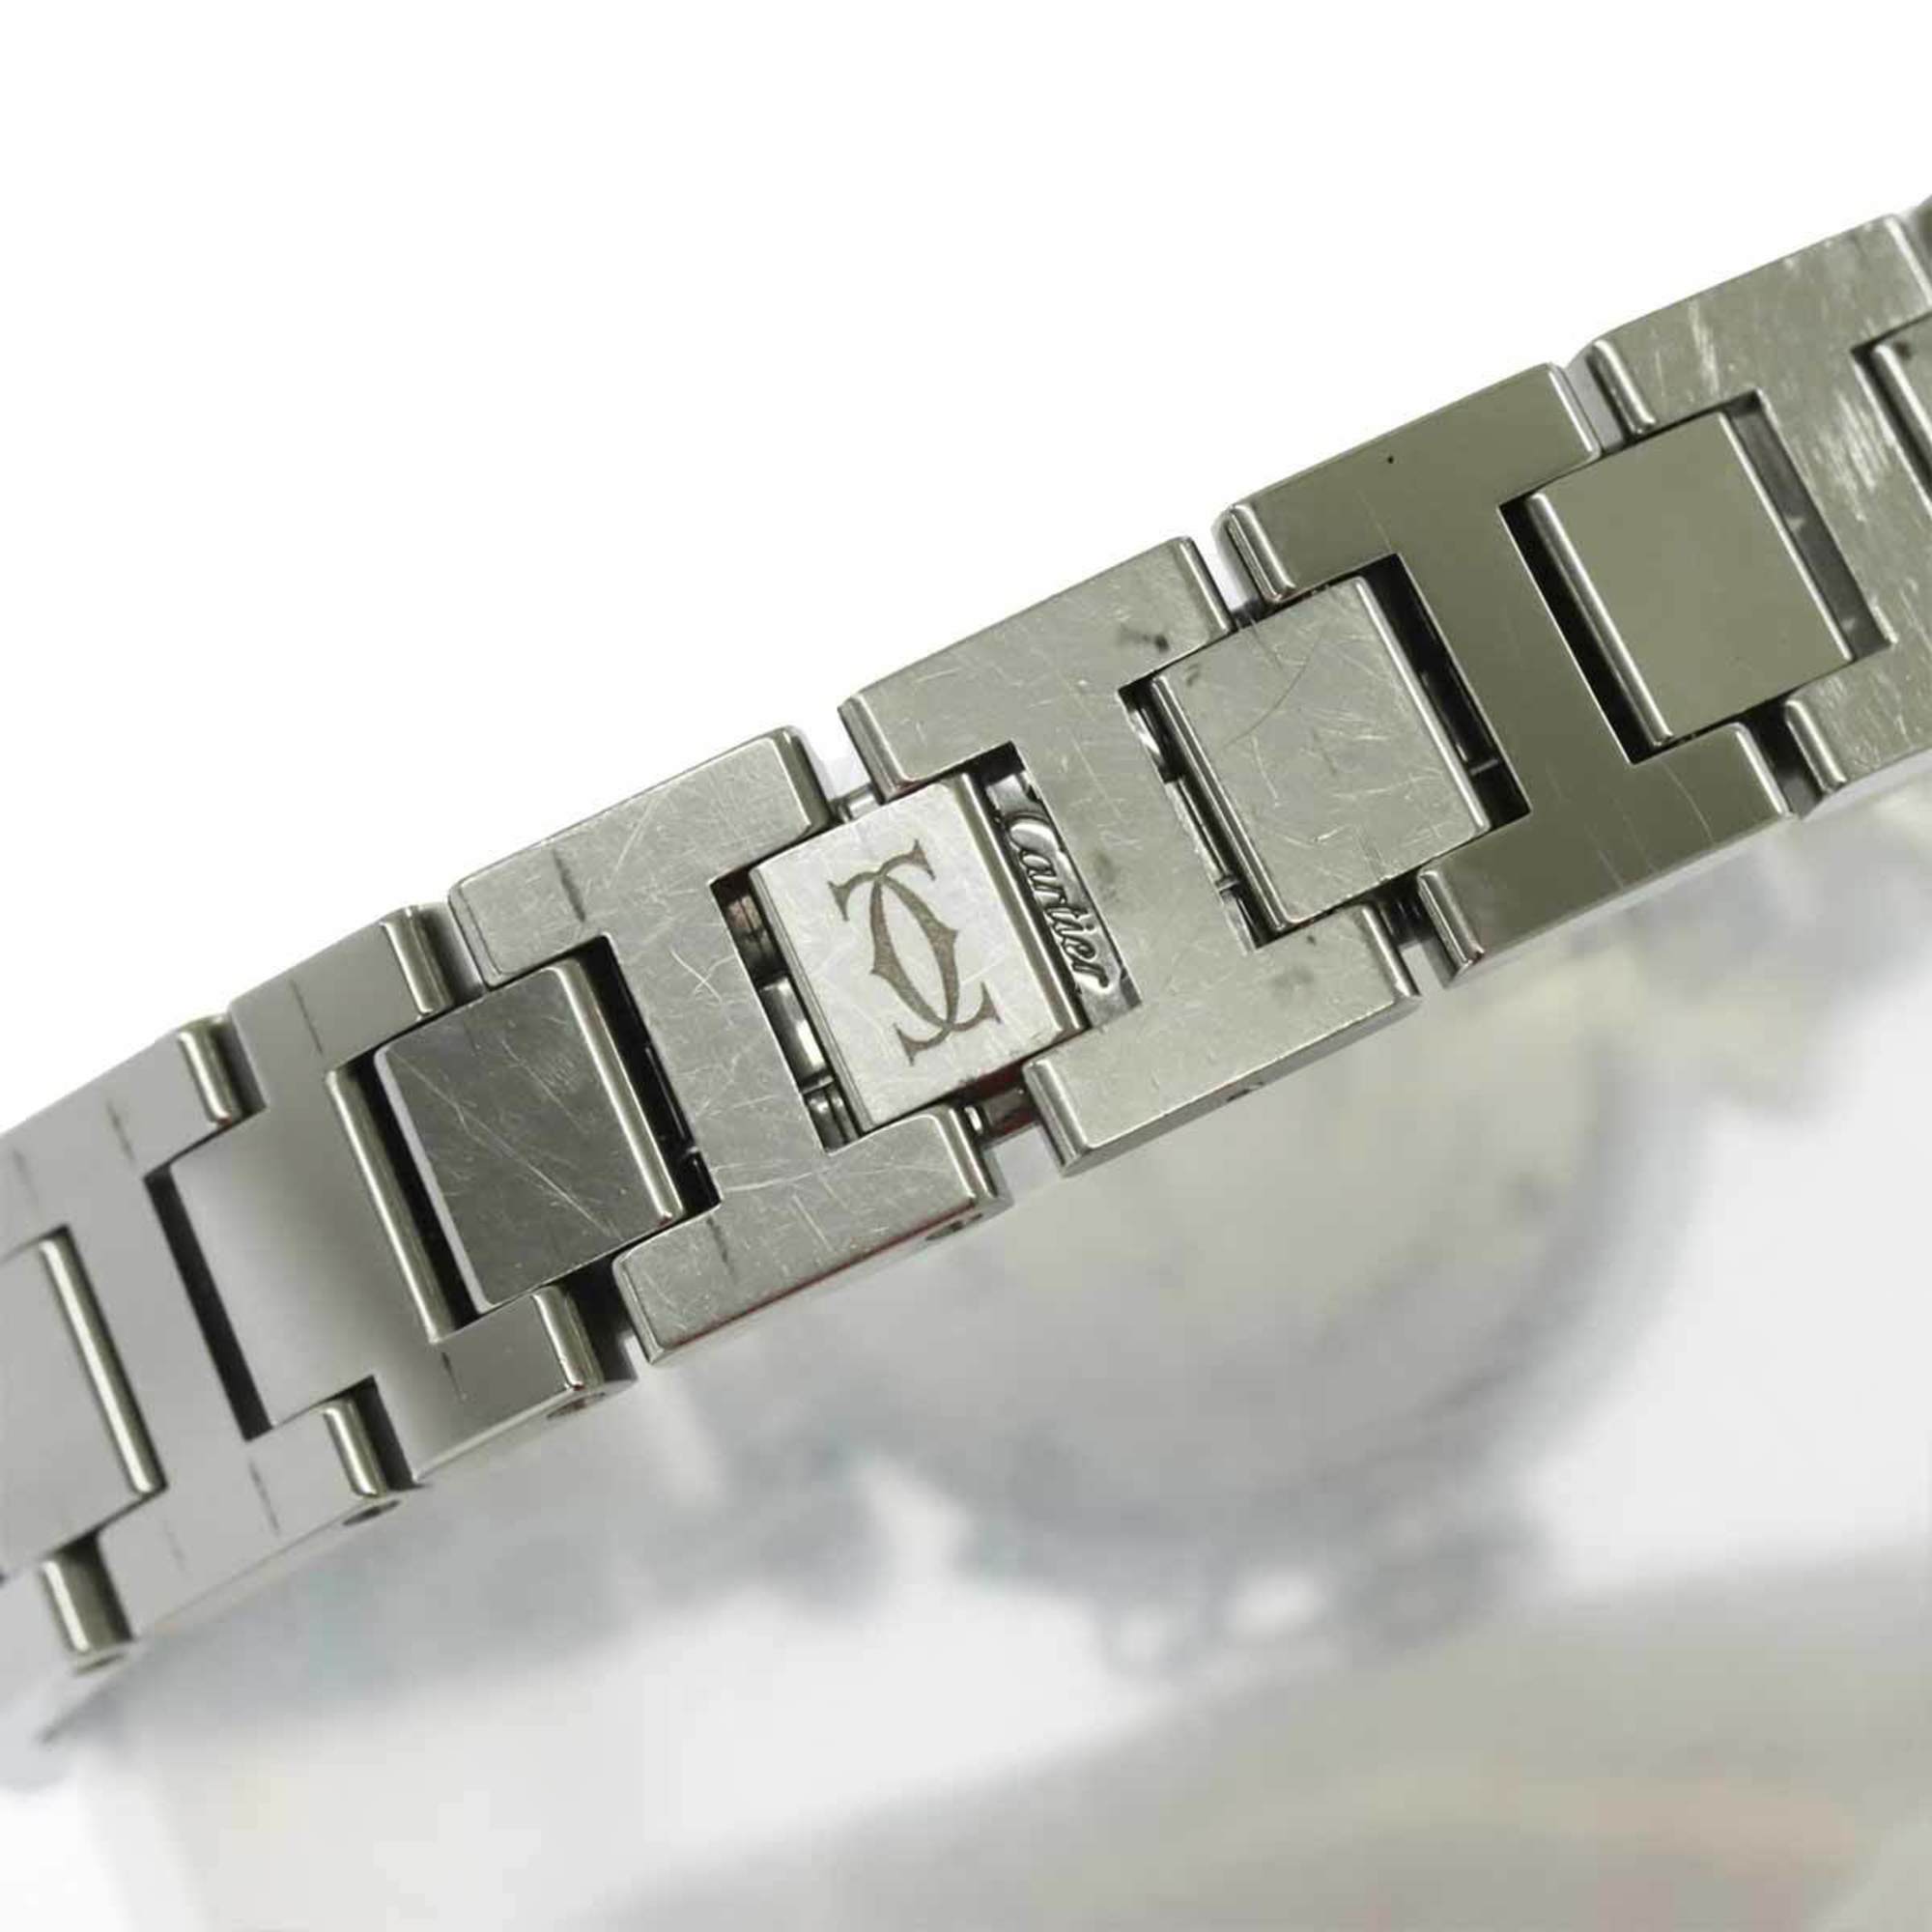 Cartier Miss Pasha W3140007 Women's Watch Silver Dial Quartz